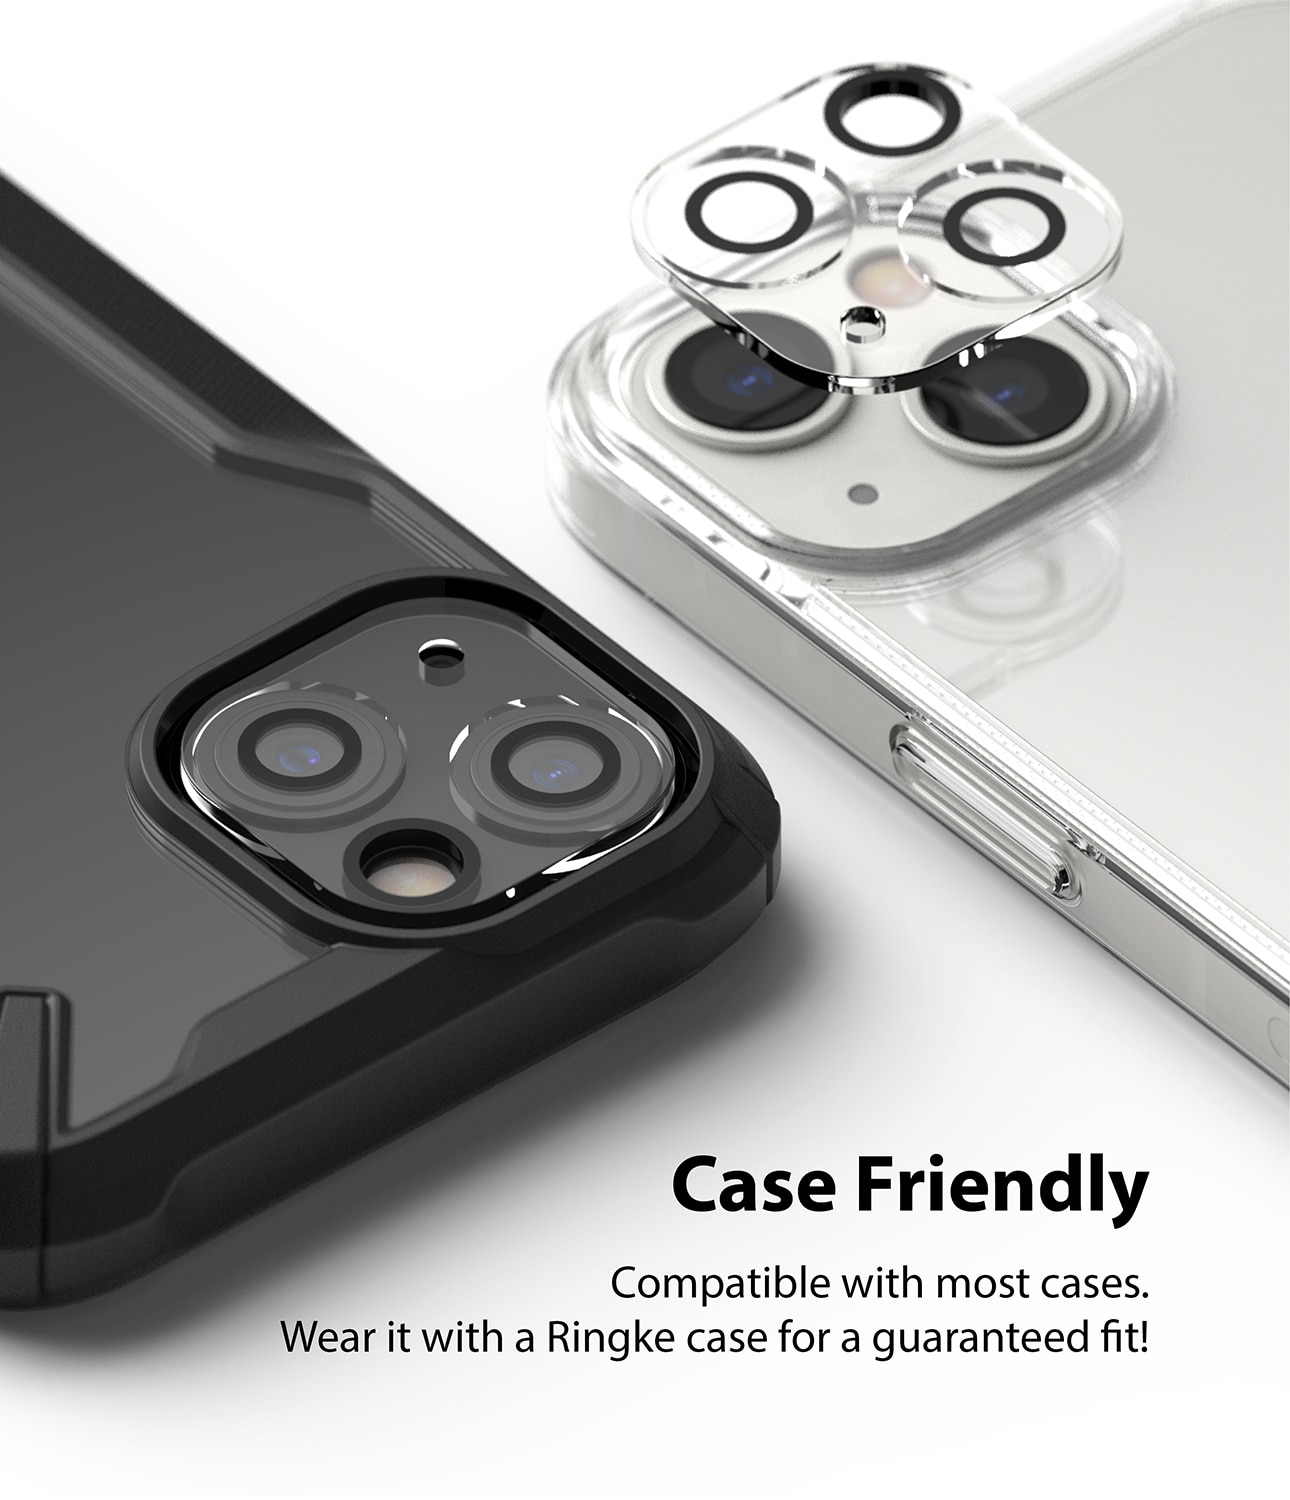 Camera Protector Glass iPhone 13 Mini (2-pack)